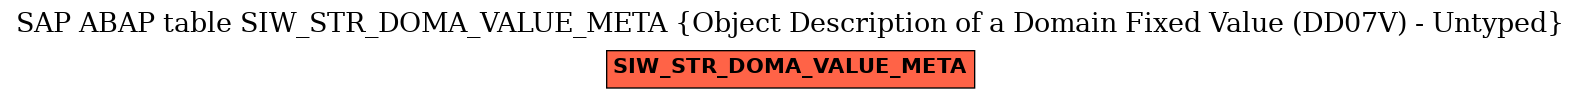 E-R Diagram for table SIW_STR_DOMA_VALUE_META (Object Description of a Domain Fixed Value (DD07V) - Untyped)